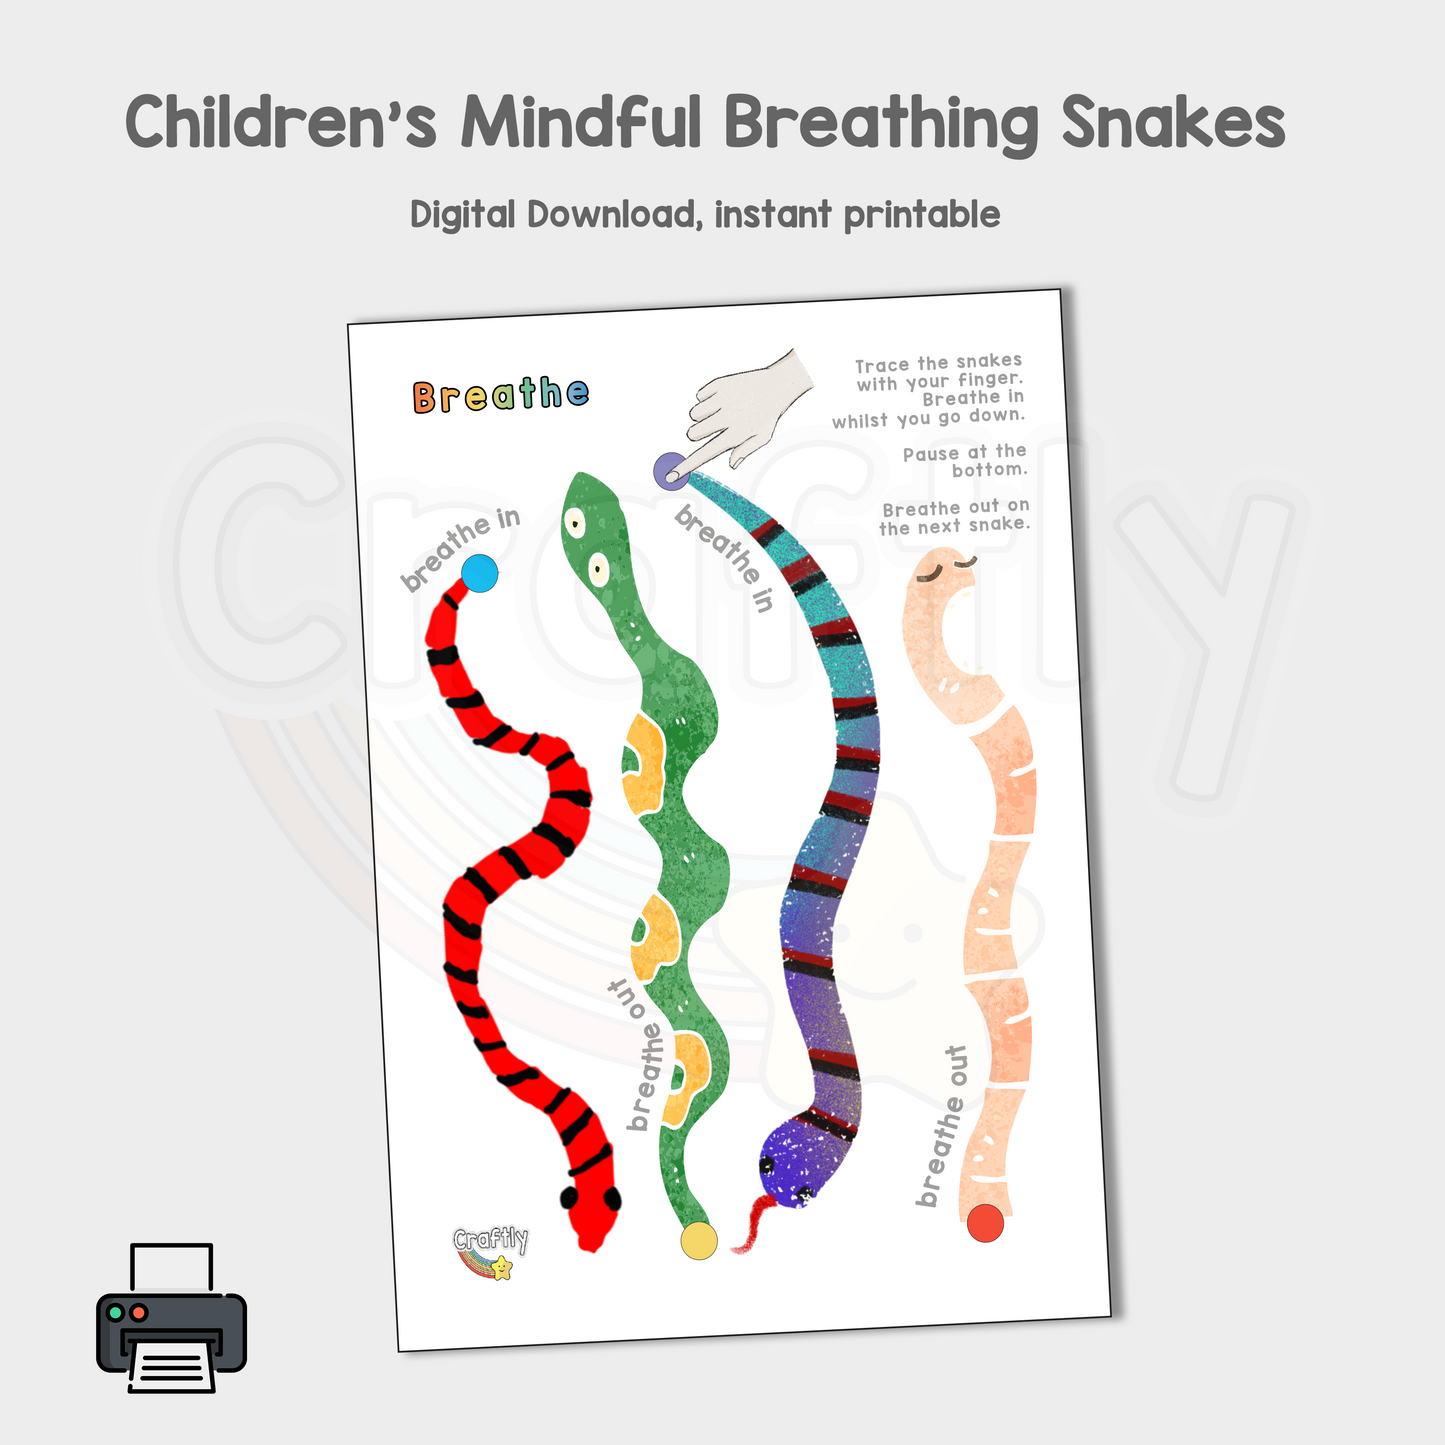 Mindful Breathing Snakes